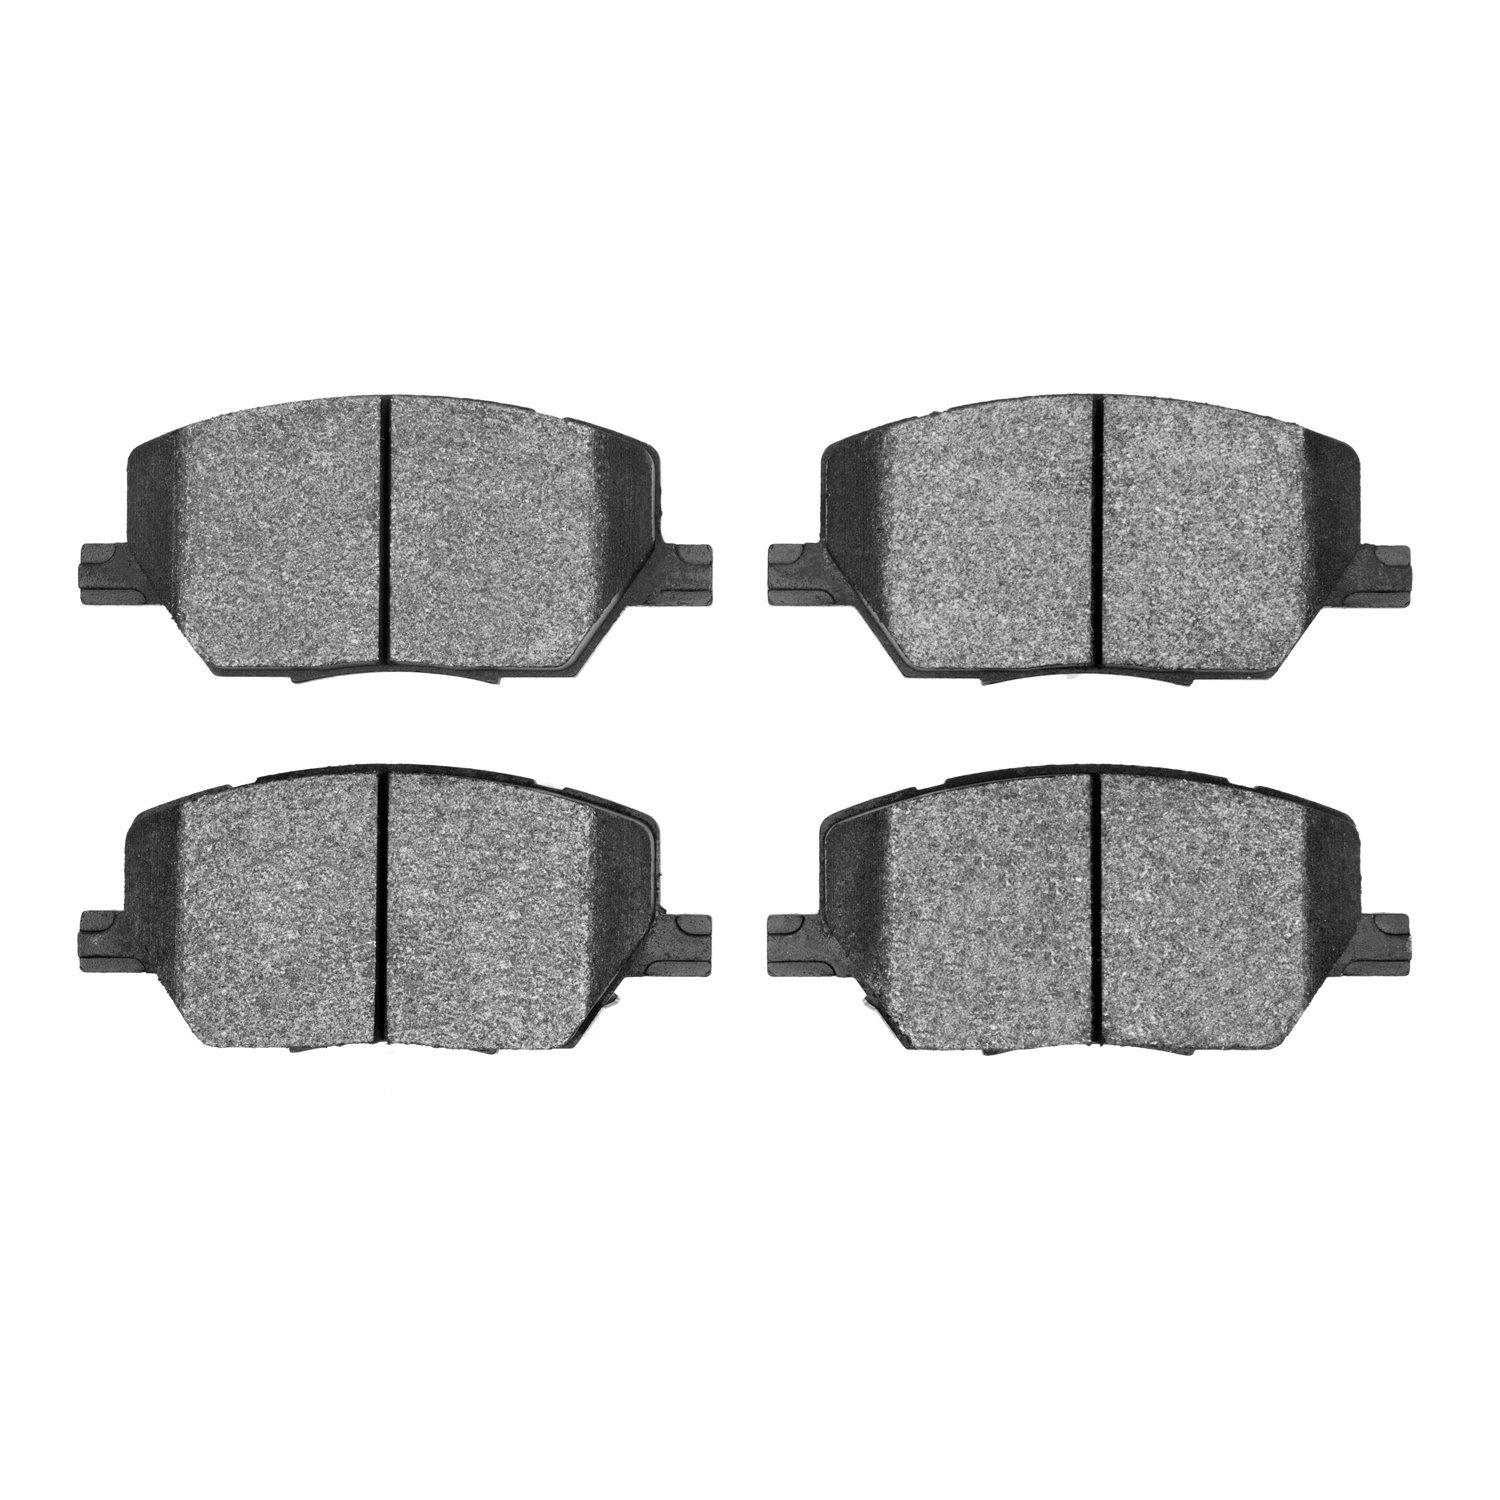 1552-1811-00 5000 Advanced Ceramic Brake Pads, Fits Select Mopar, Position: Front